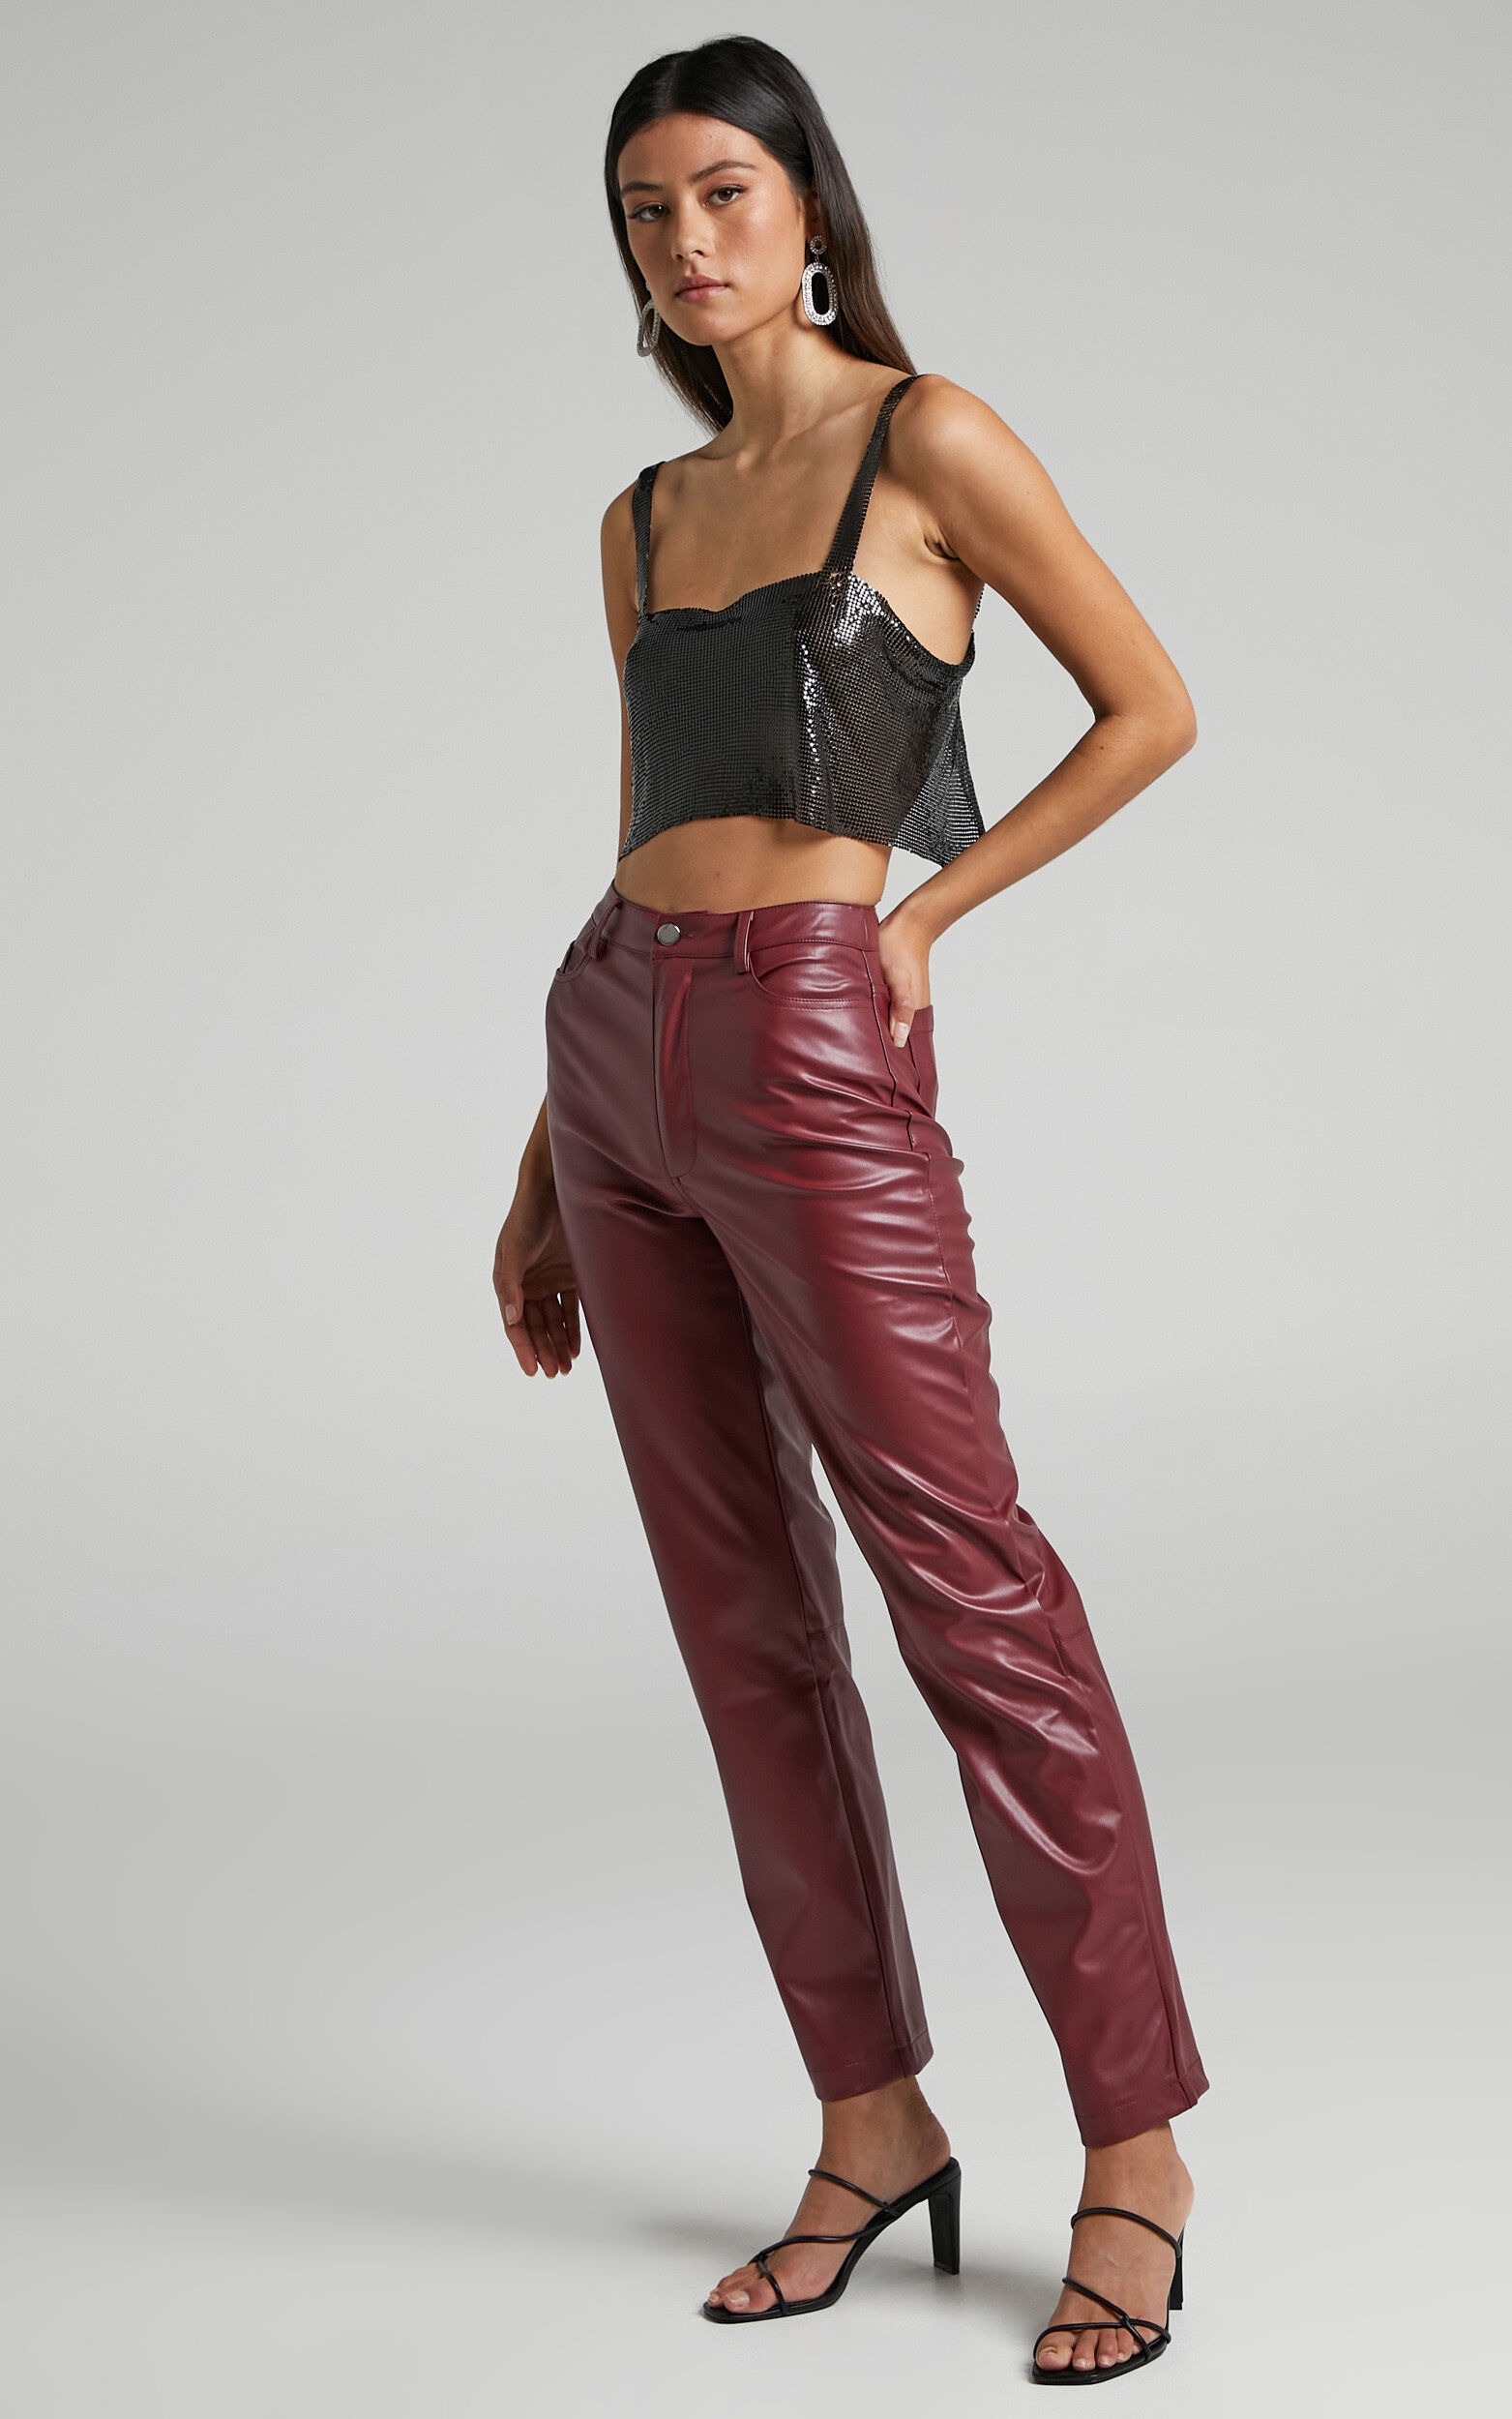 Vila snake leather look flared pants in wine | ASOS